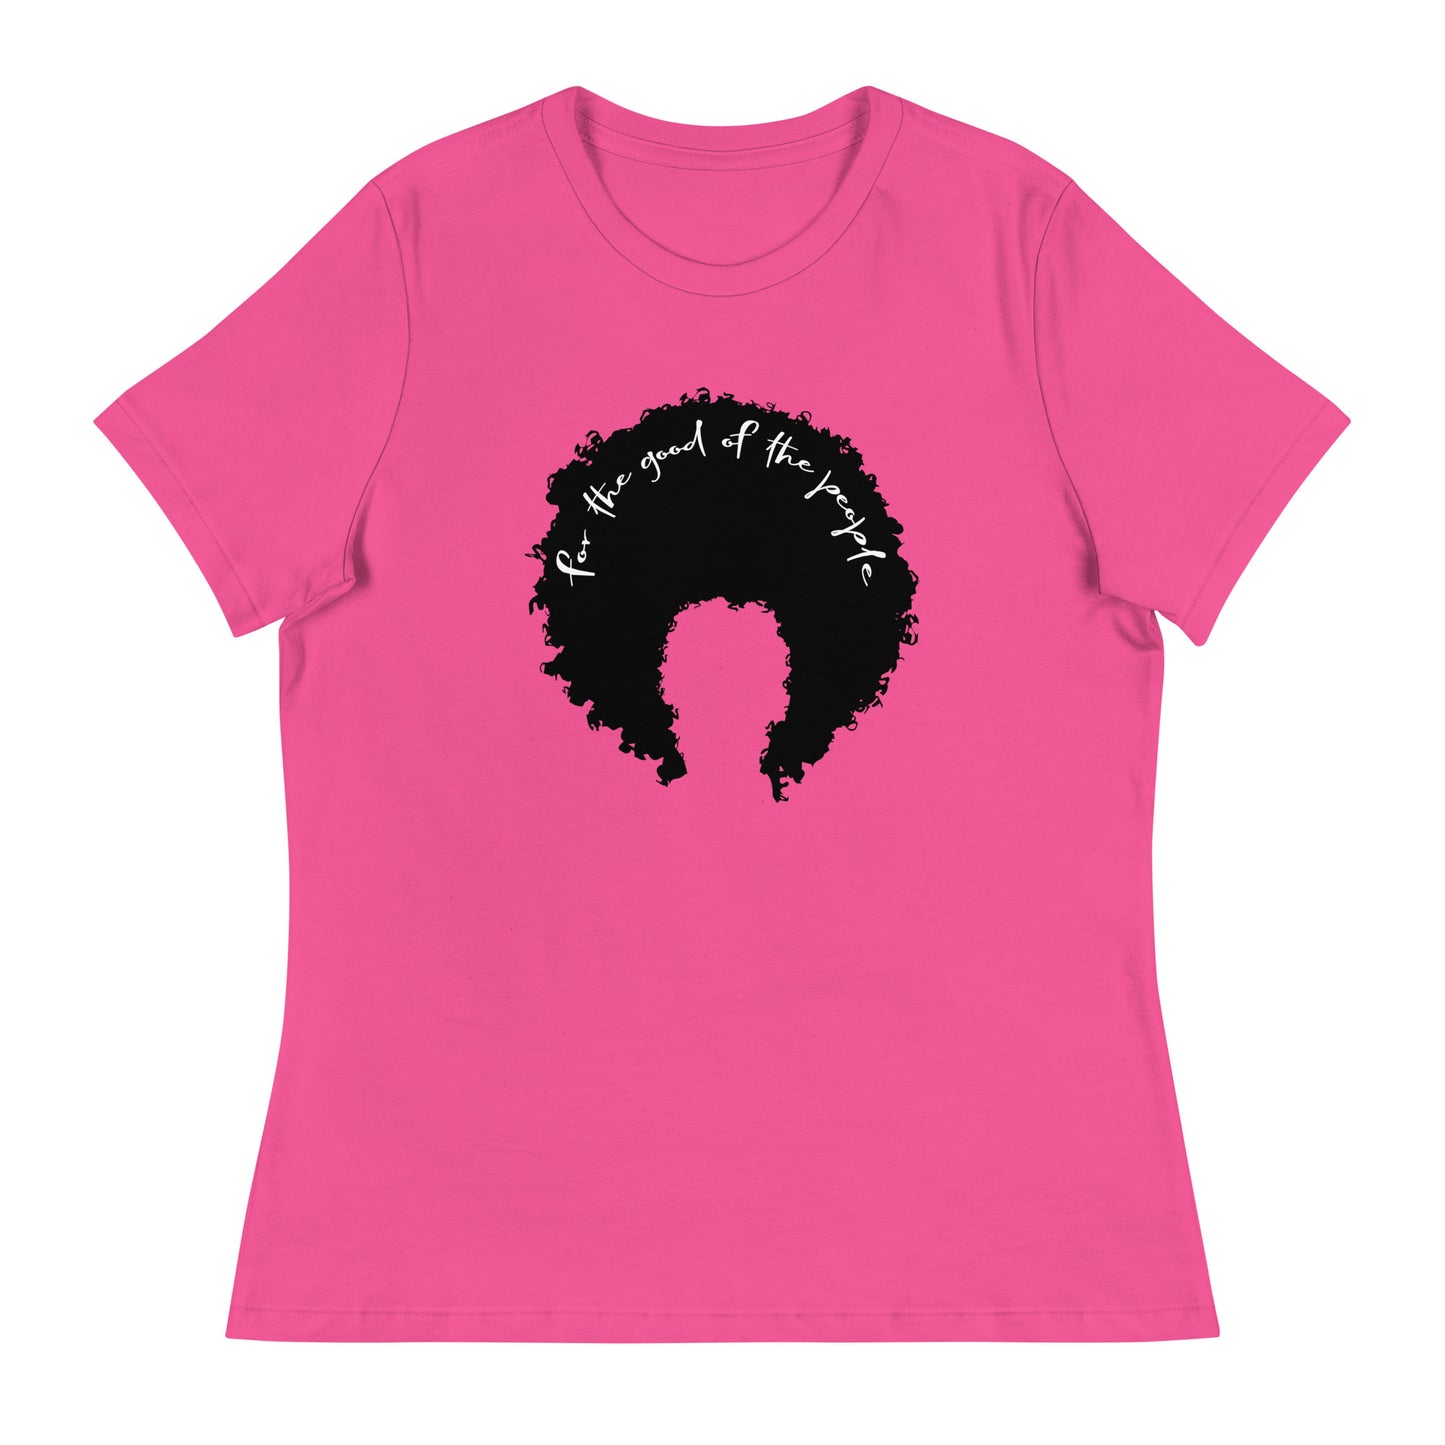 Signature Women's Afro T-Shirt - Black and White